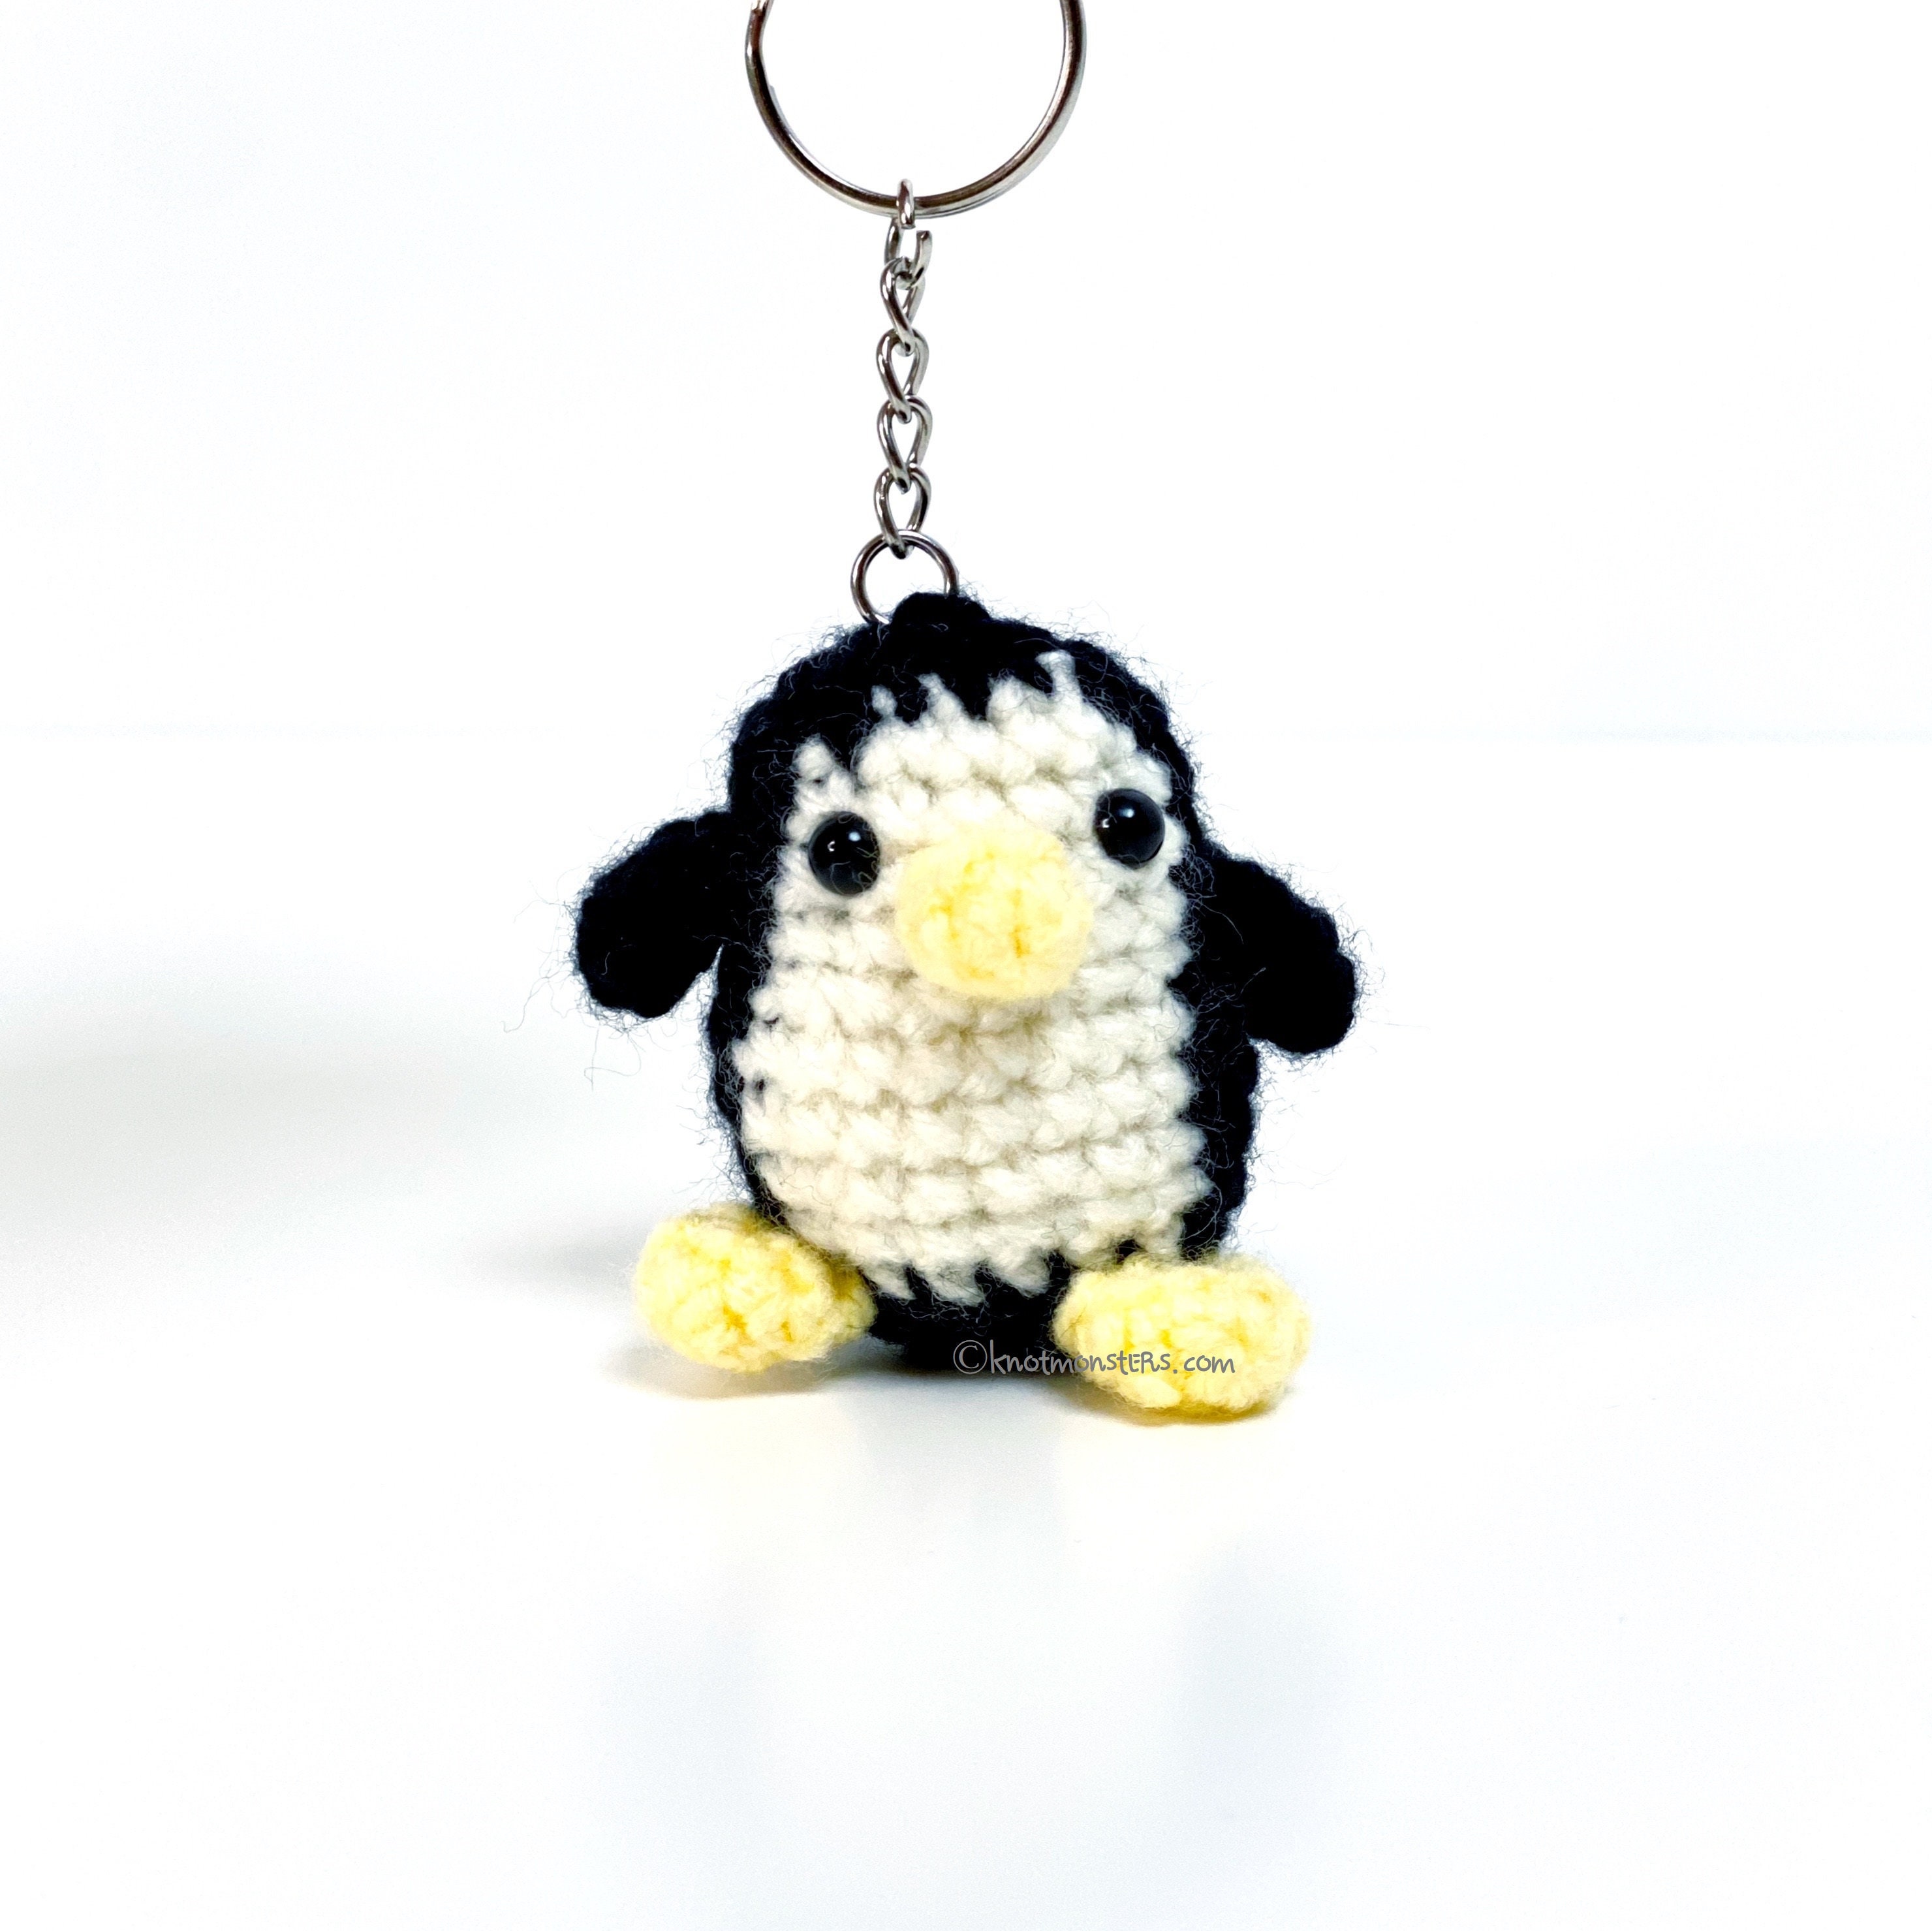 Tuto amigurumi : pingouin - Tout sur le crochet et les Amigurumis!